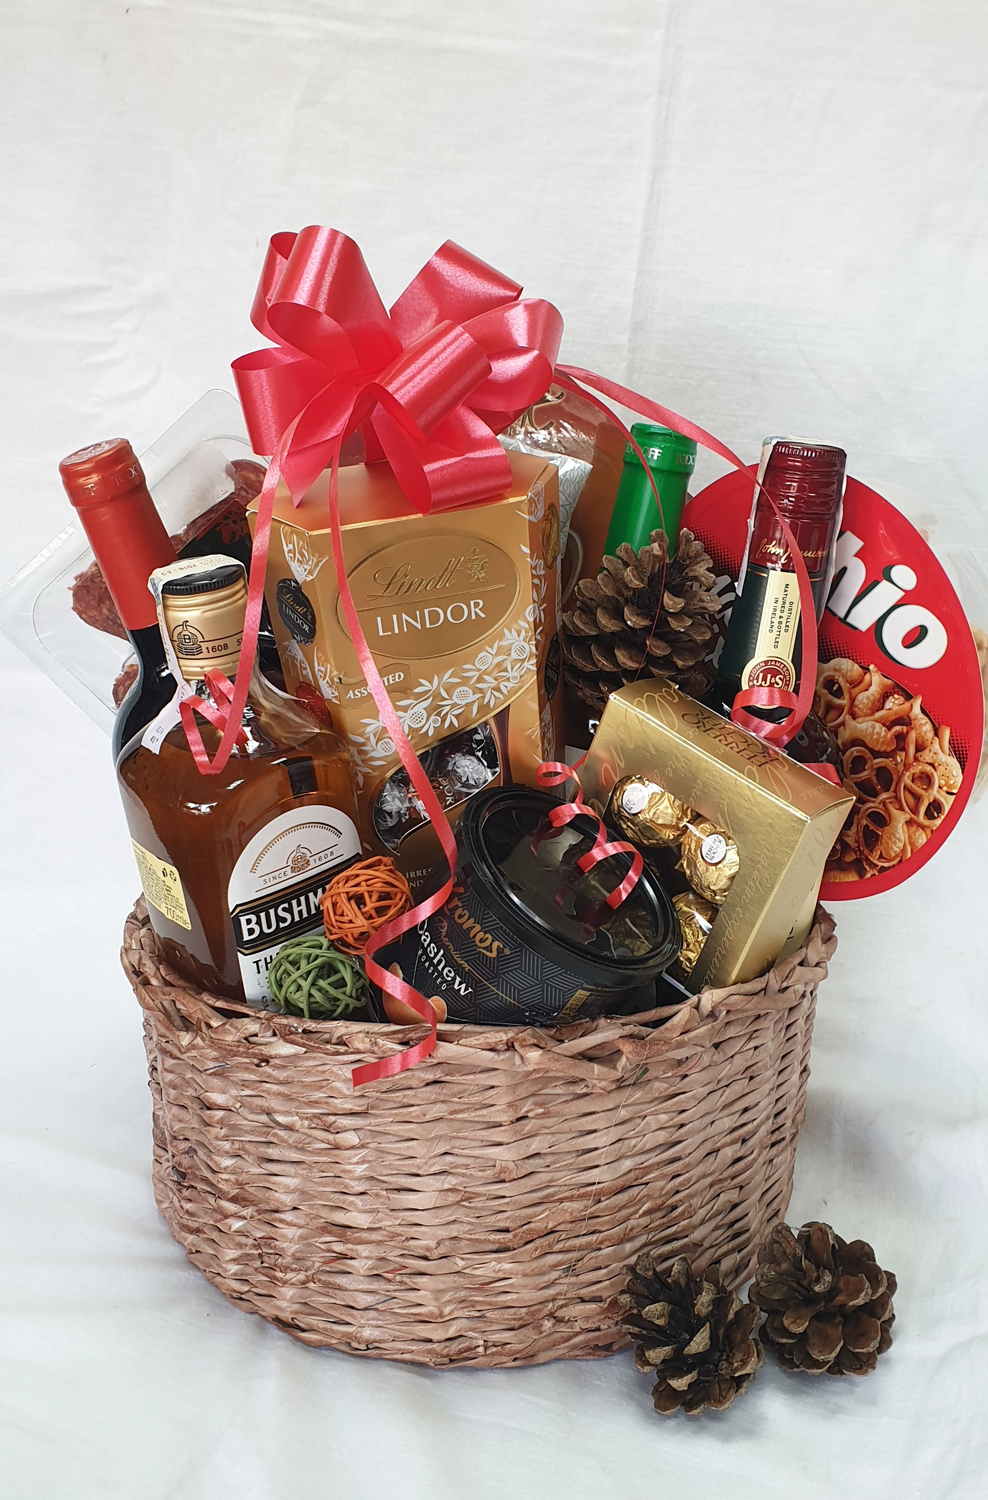 Bushmills basket, wines, chocolate and cones